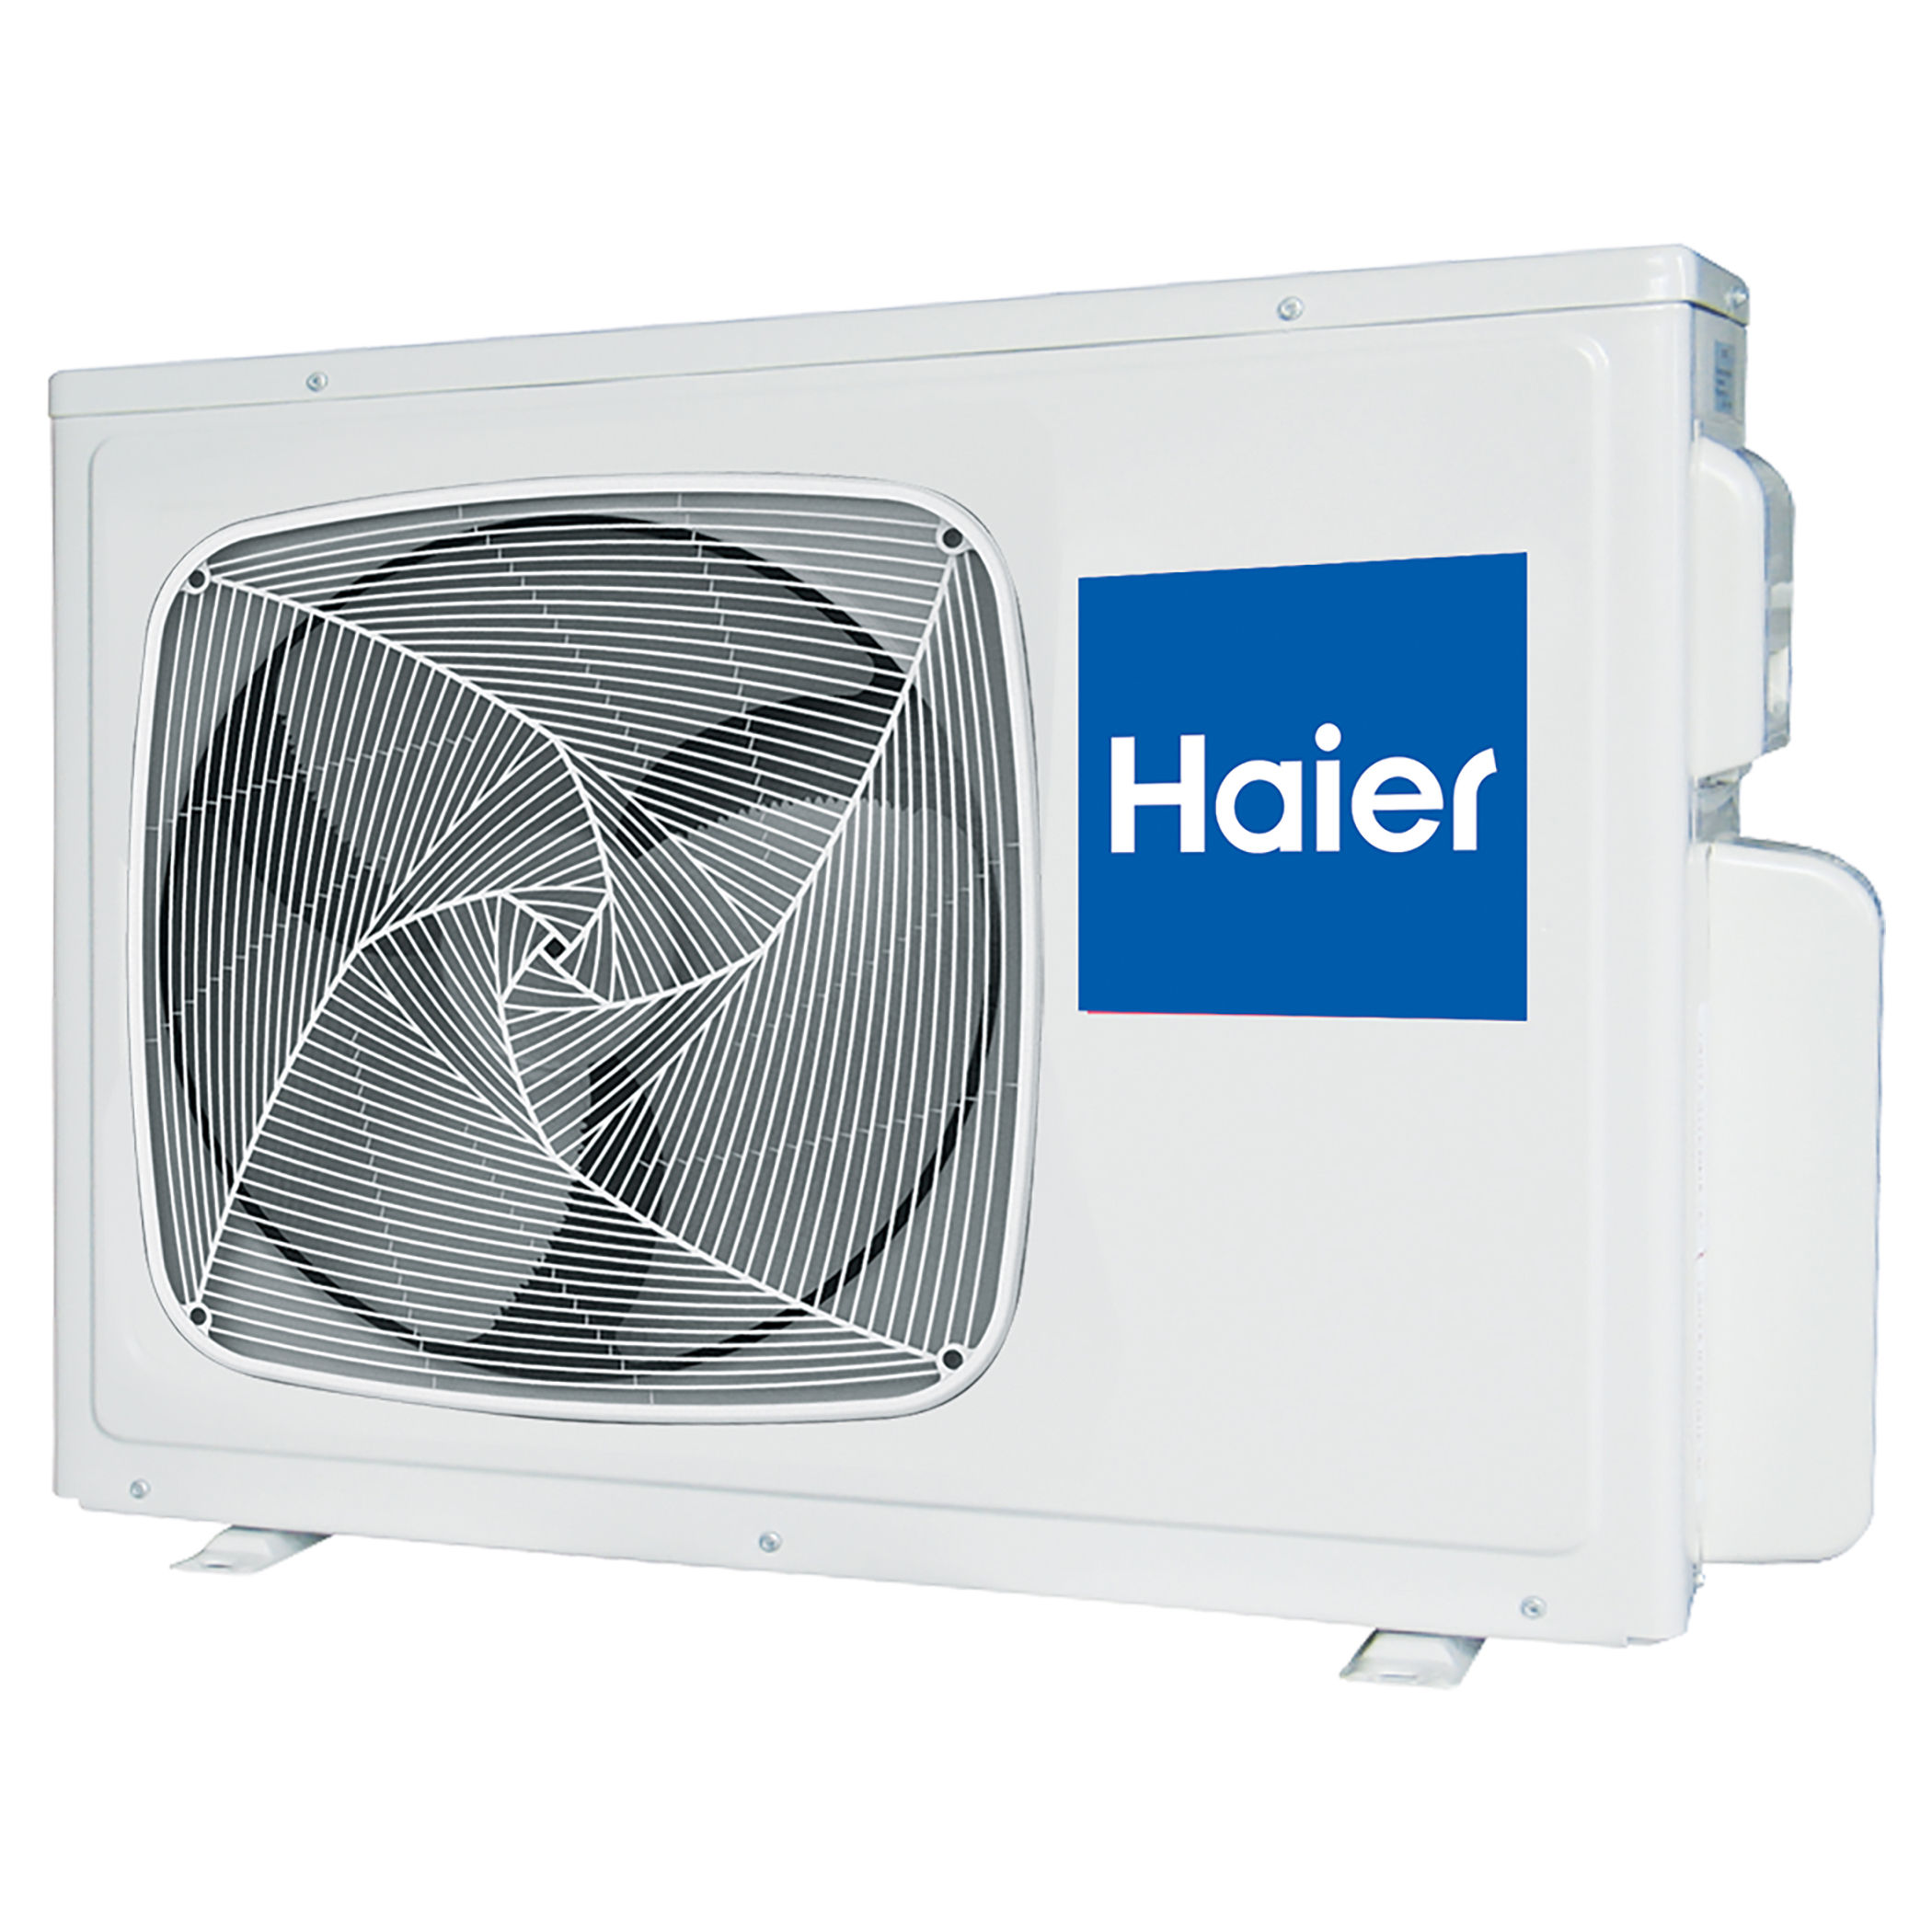 Conditioner HAIER JADE Plus DC Inverter Super Match AS25S2SJ1FA-3-1U25MECFRA-4